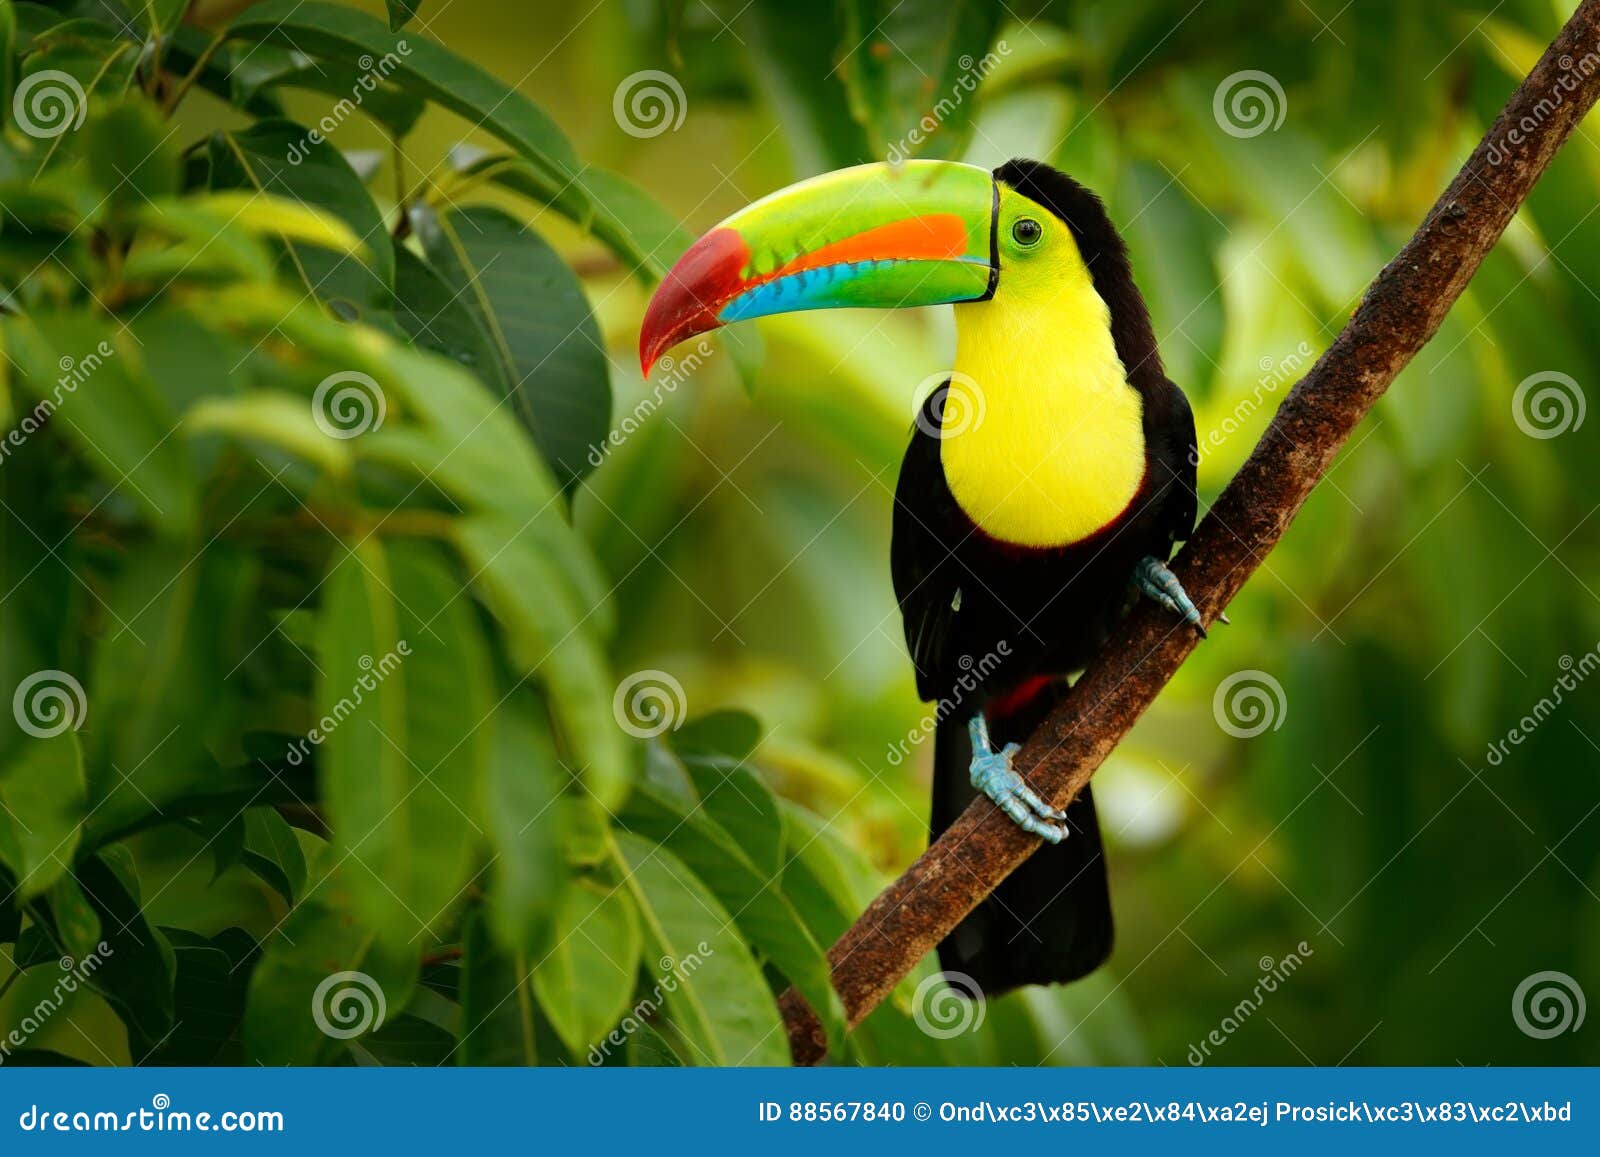 keel-billed toucan, ramphastos sulfuratus, bird with big bill.